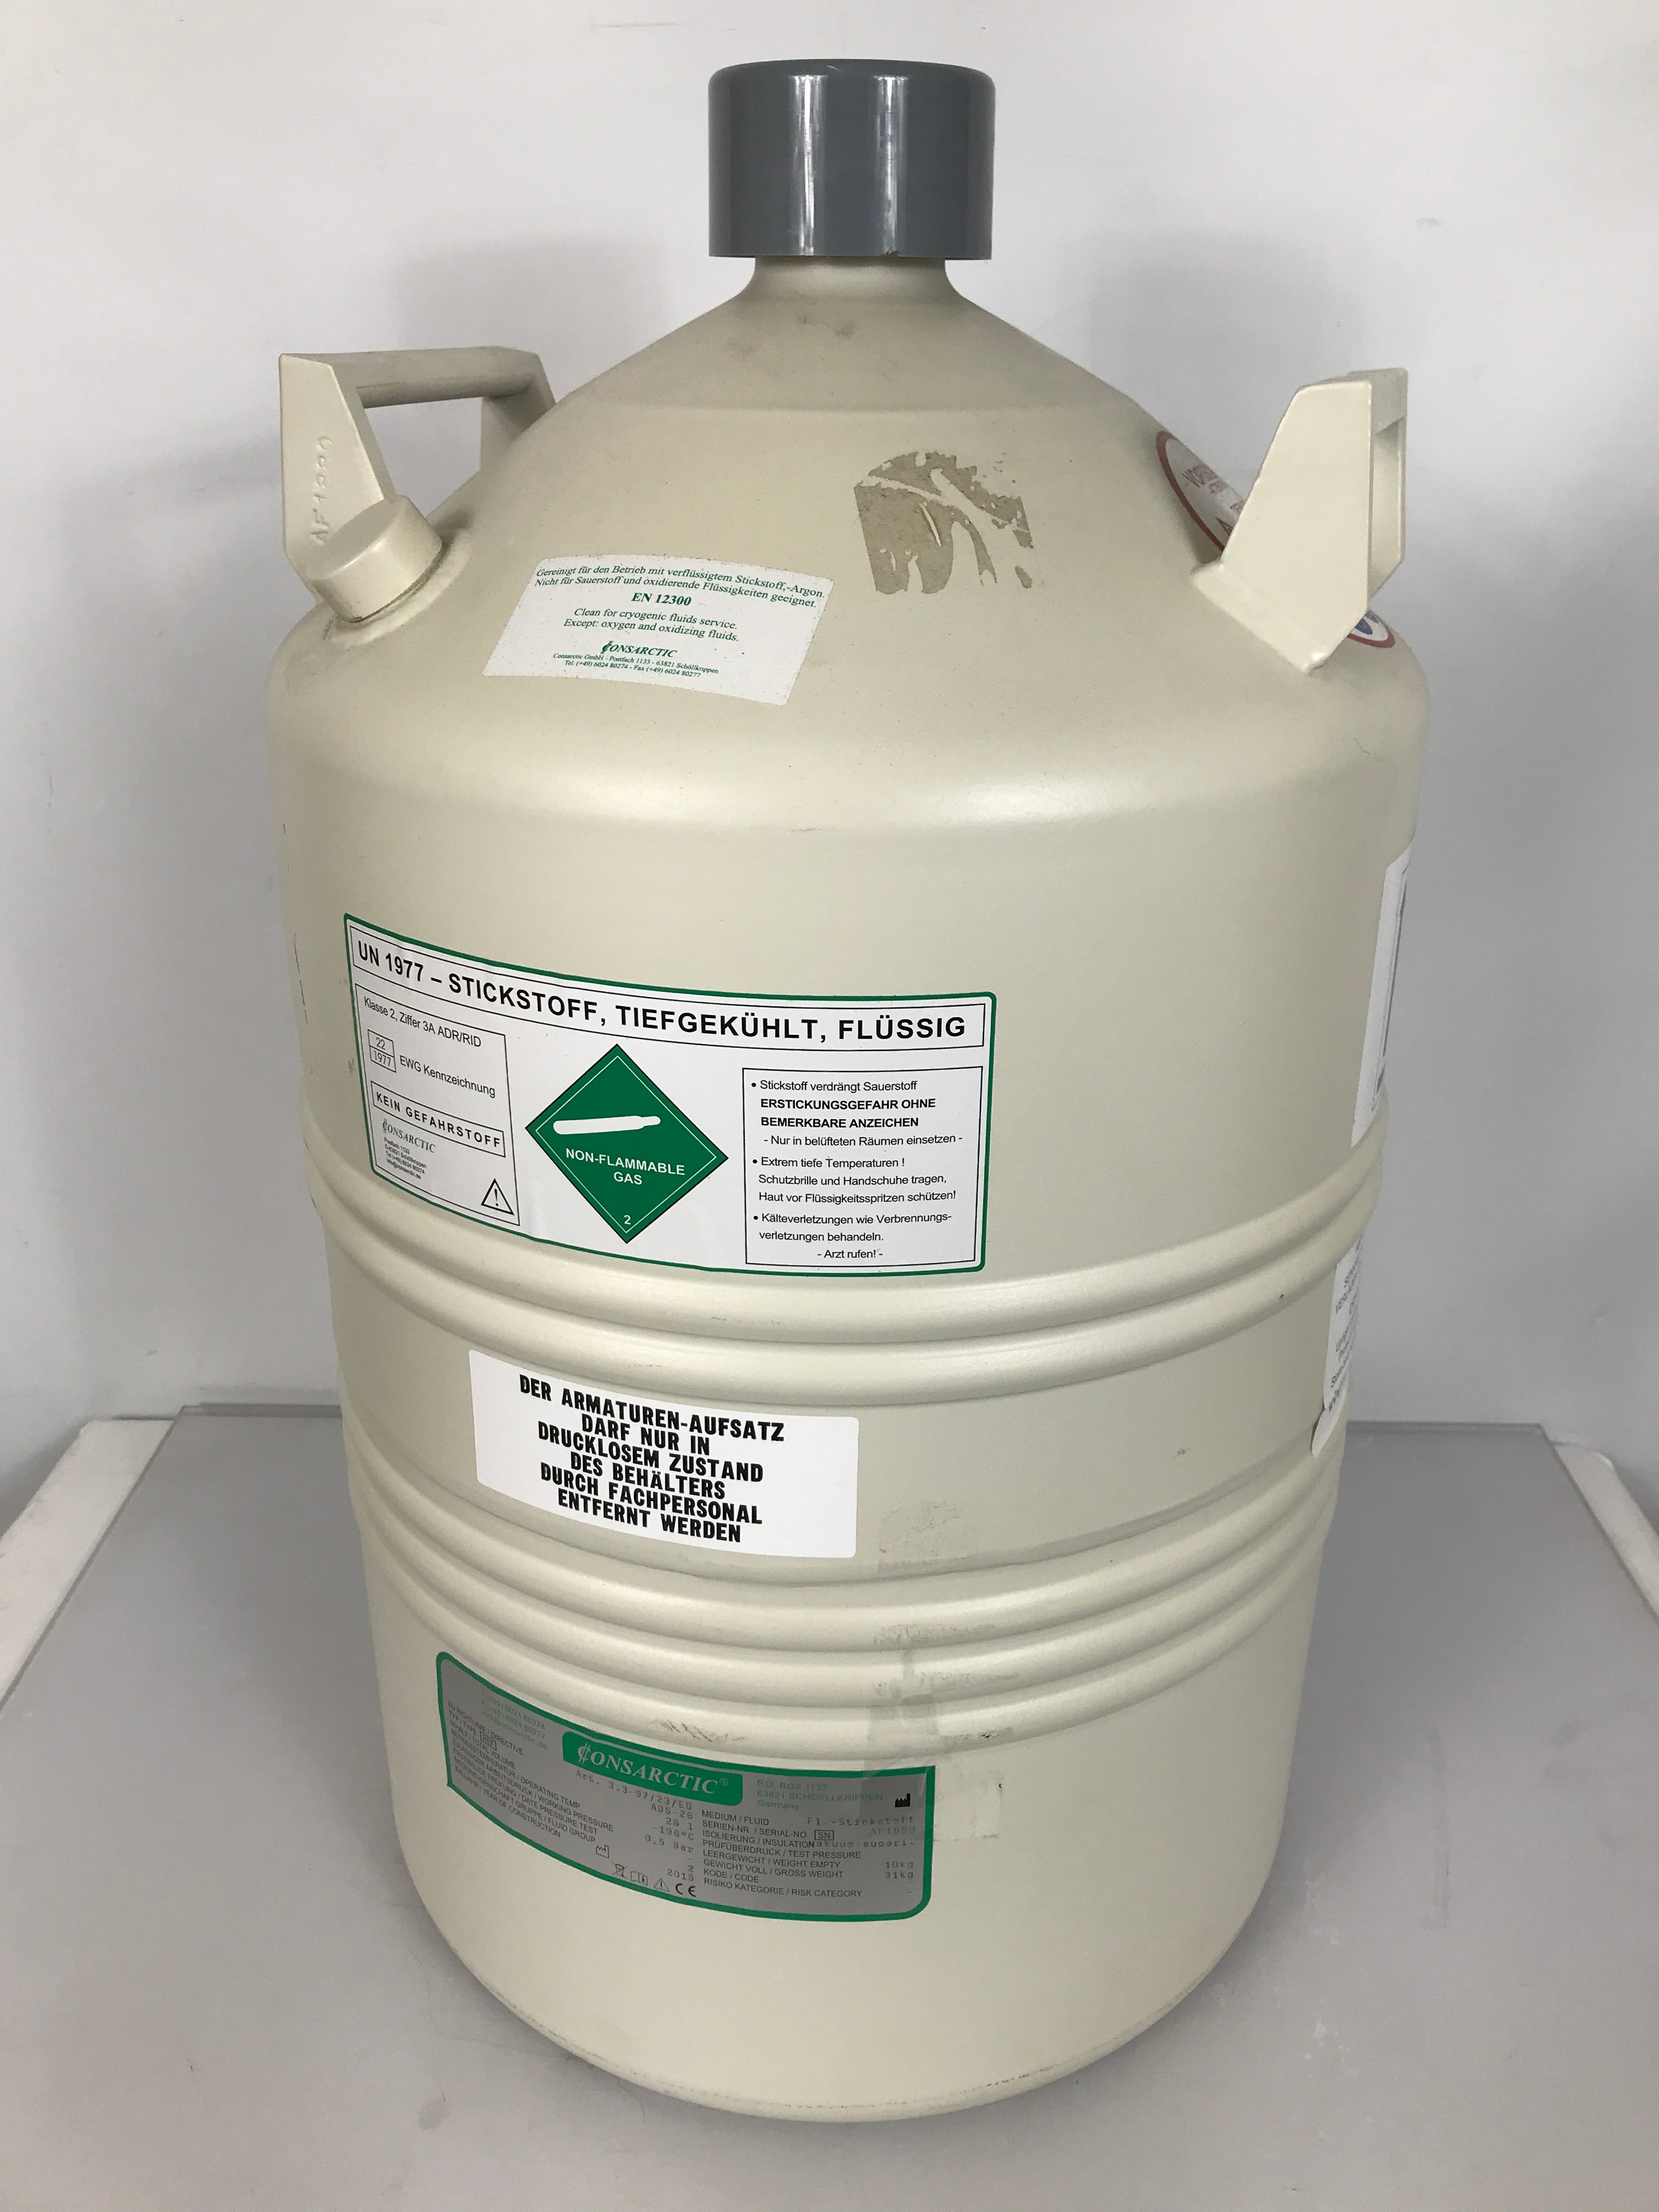 Consarctic ADS-26 Liquid Nitrogen Cryocontainer Storage Tank